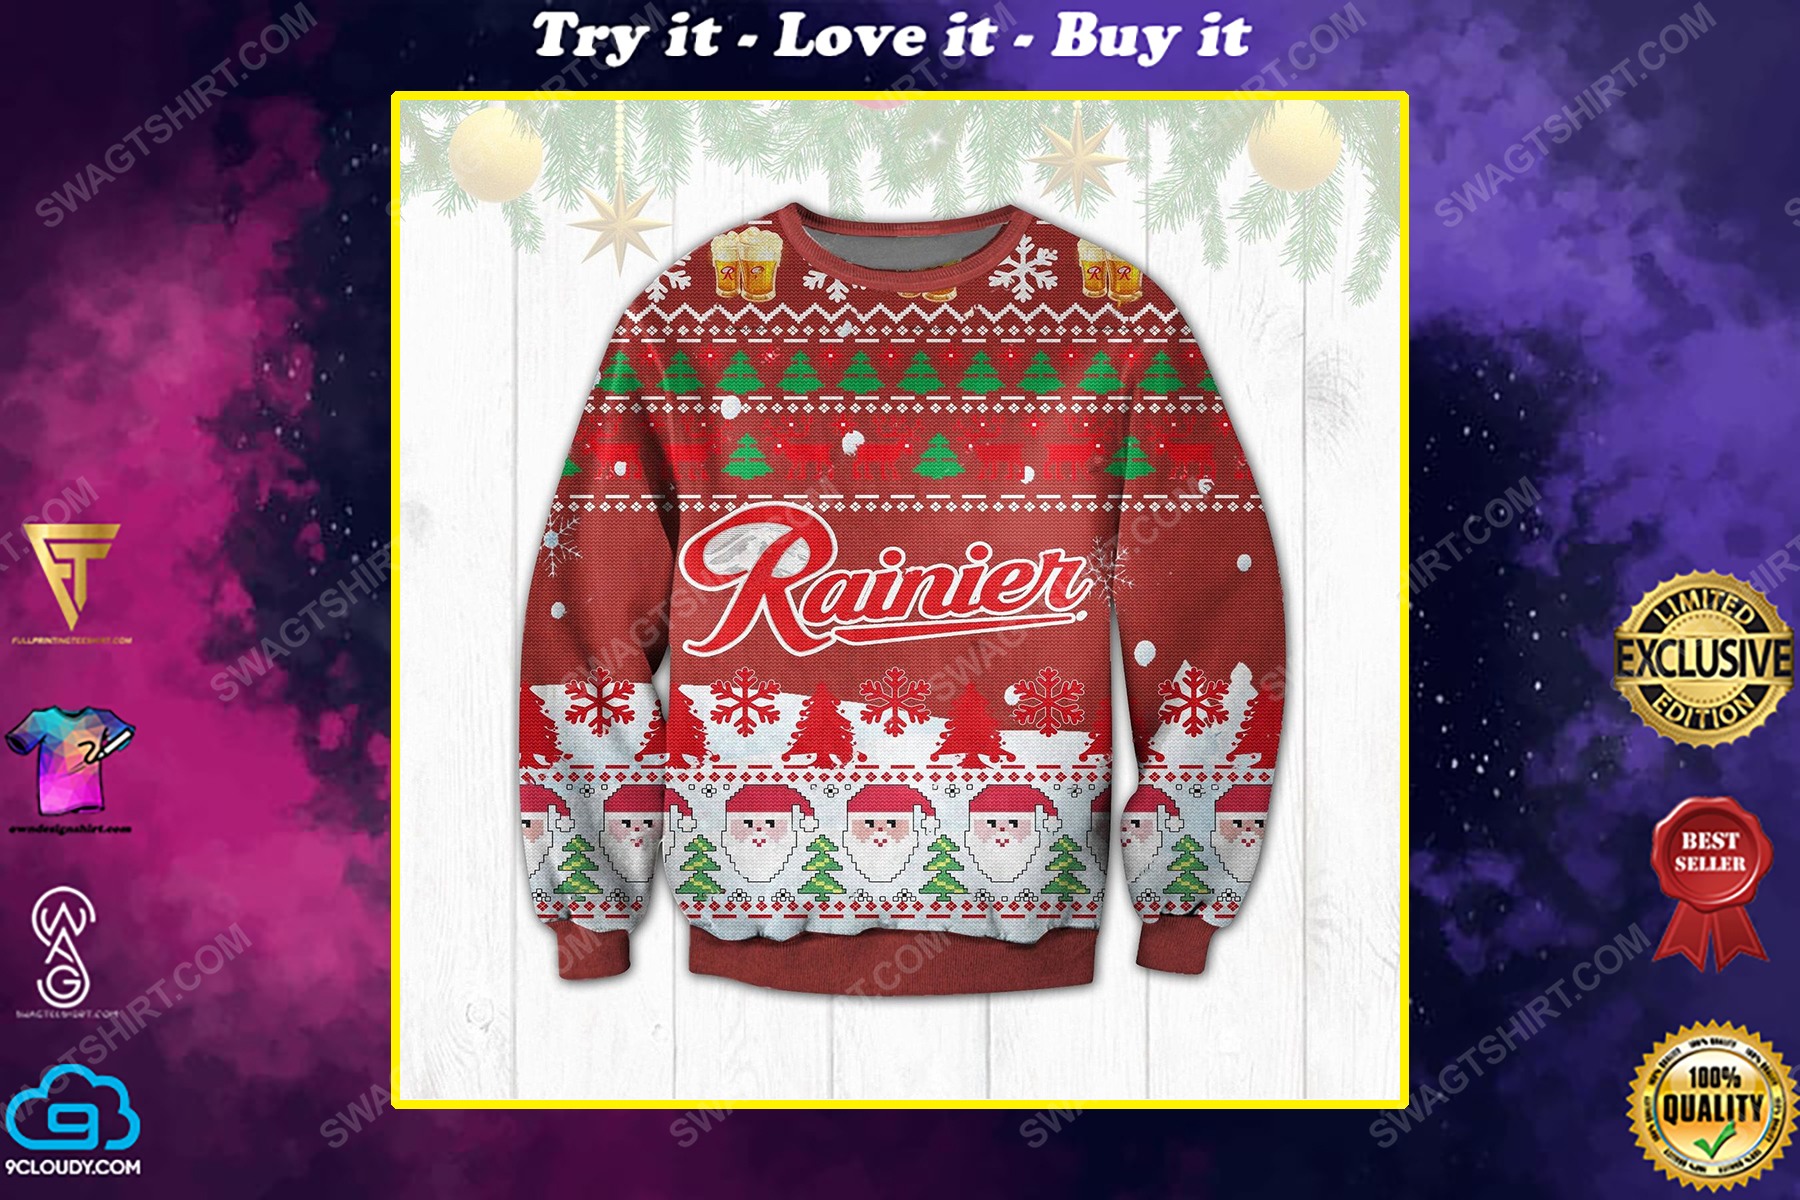 Rainier brewing company ugly christmas sweater